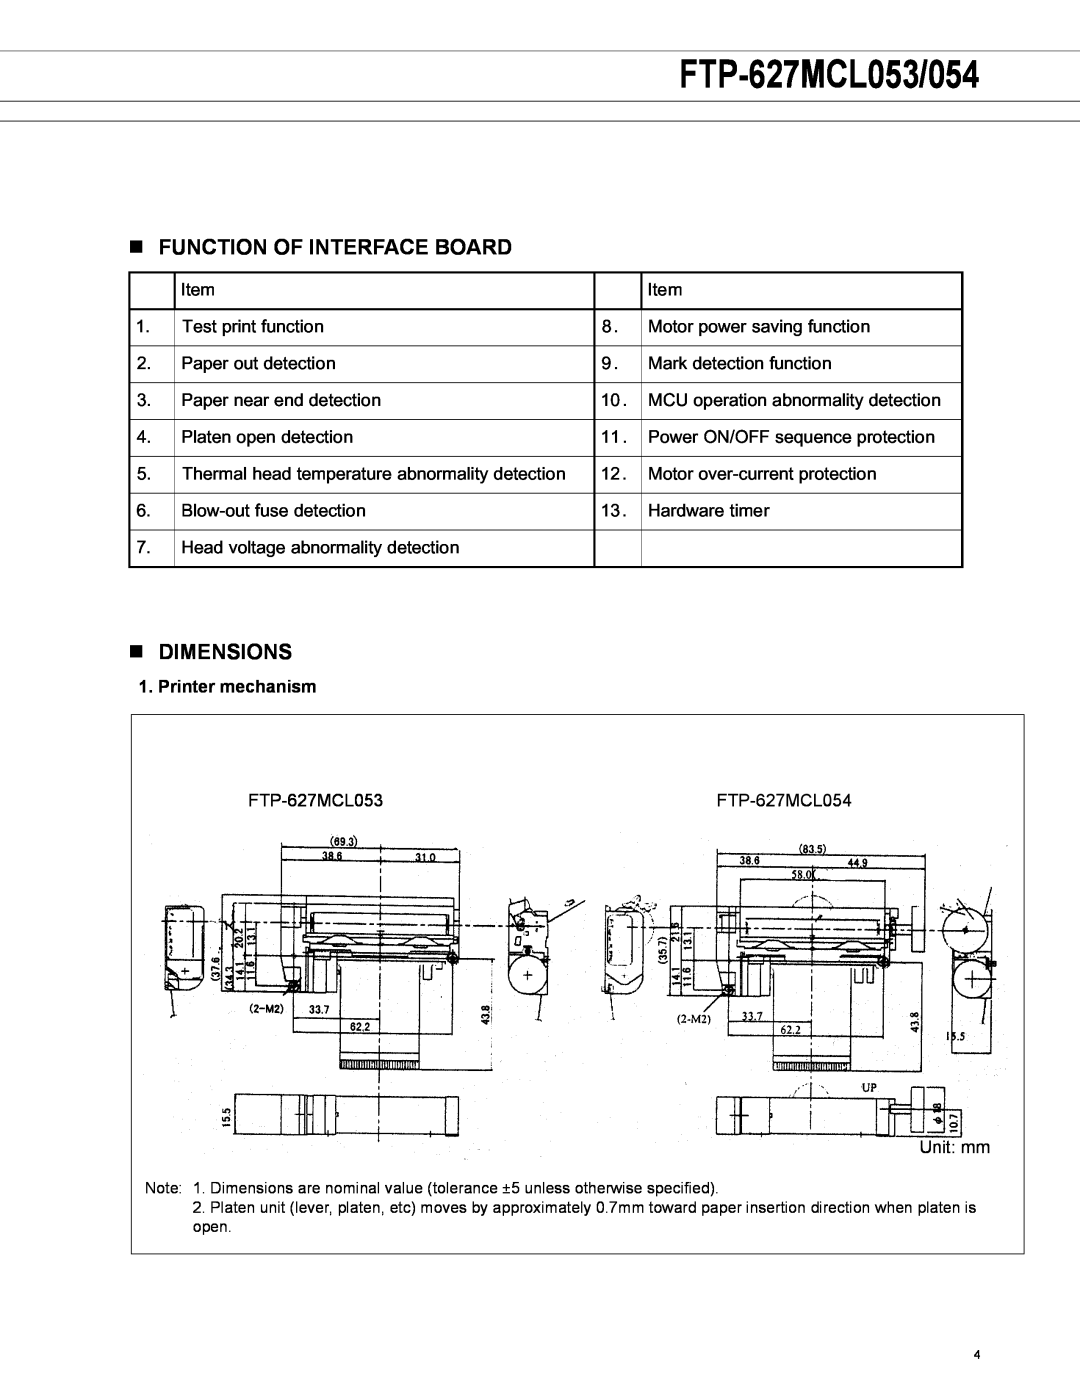 Fujitsu FTP-627MCL054 manual n FUNCTION OF INTERFACE BOARD, n dimensions, Printer mechanism, FTP-627MCL053/054 